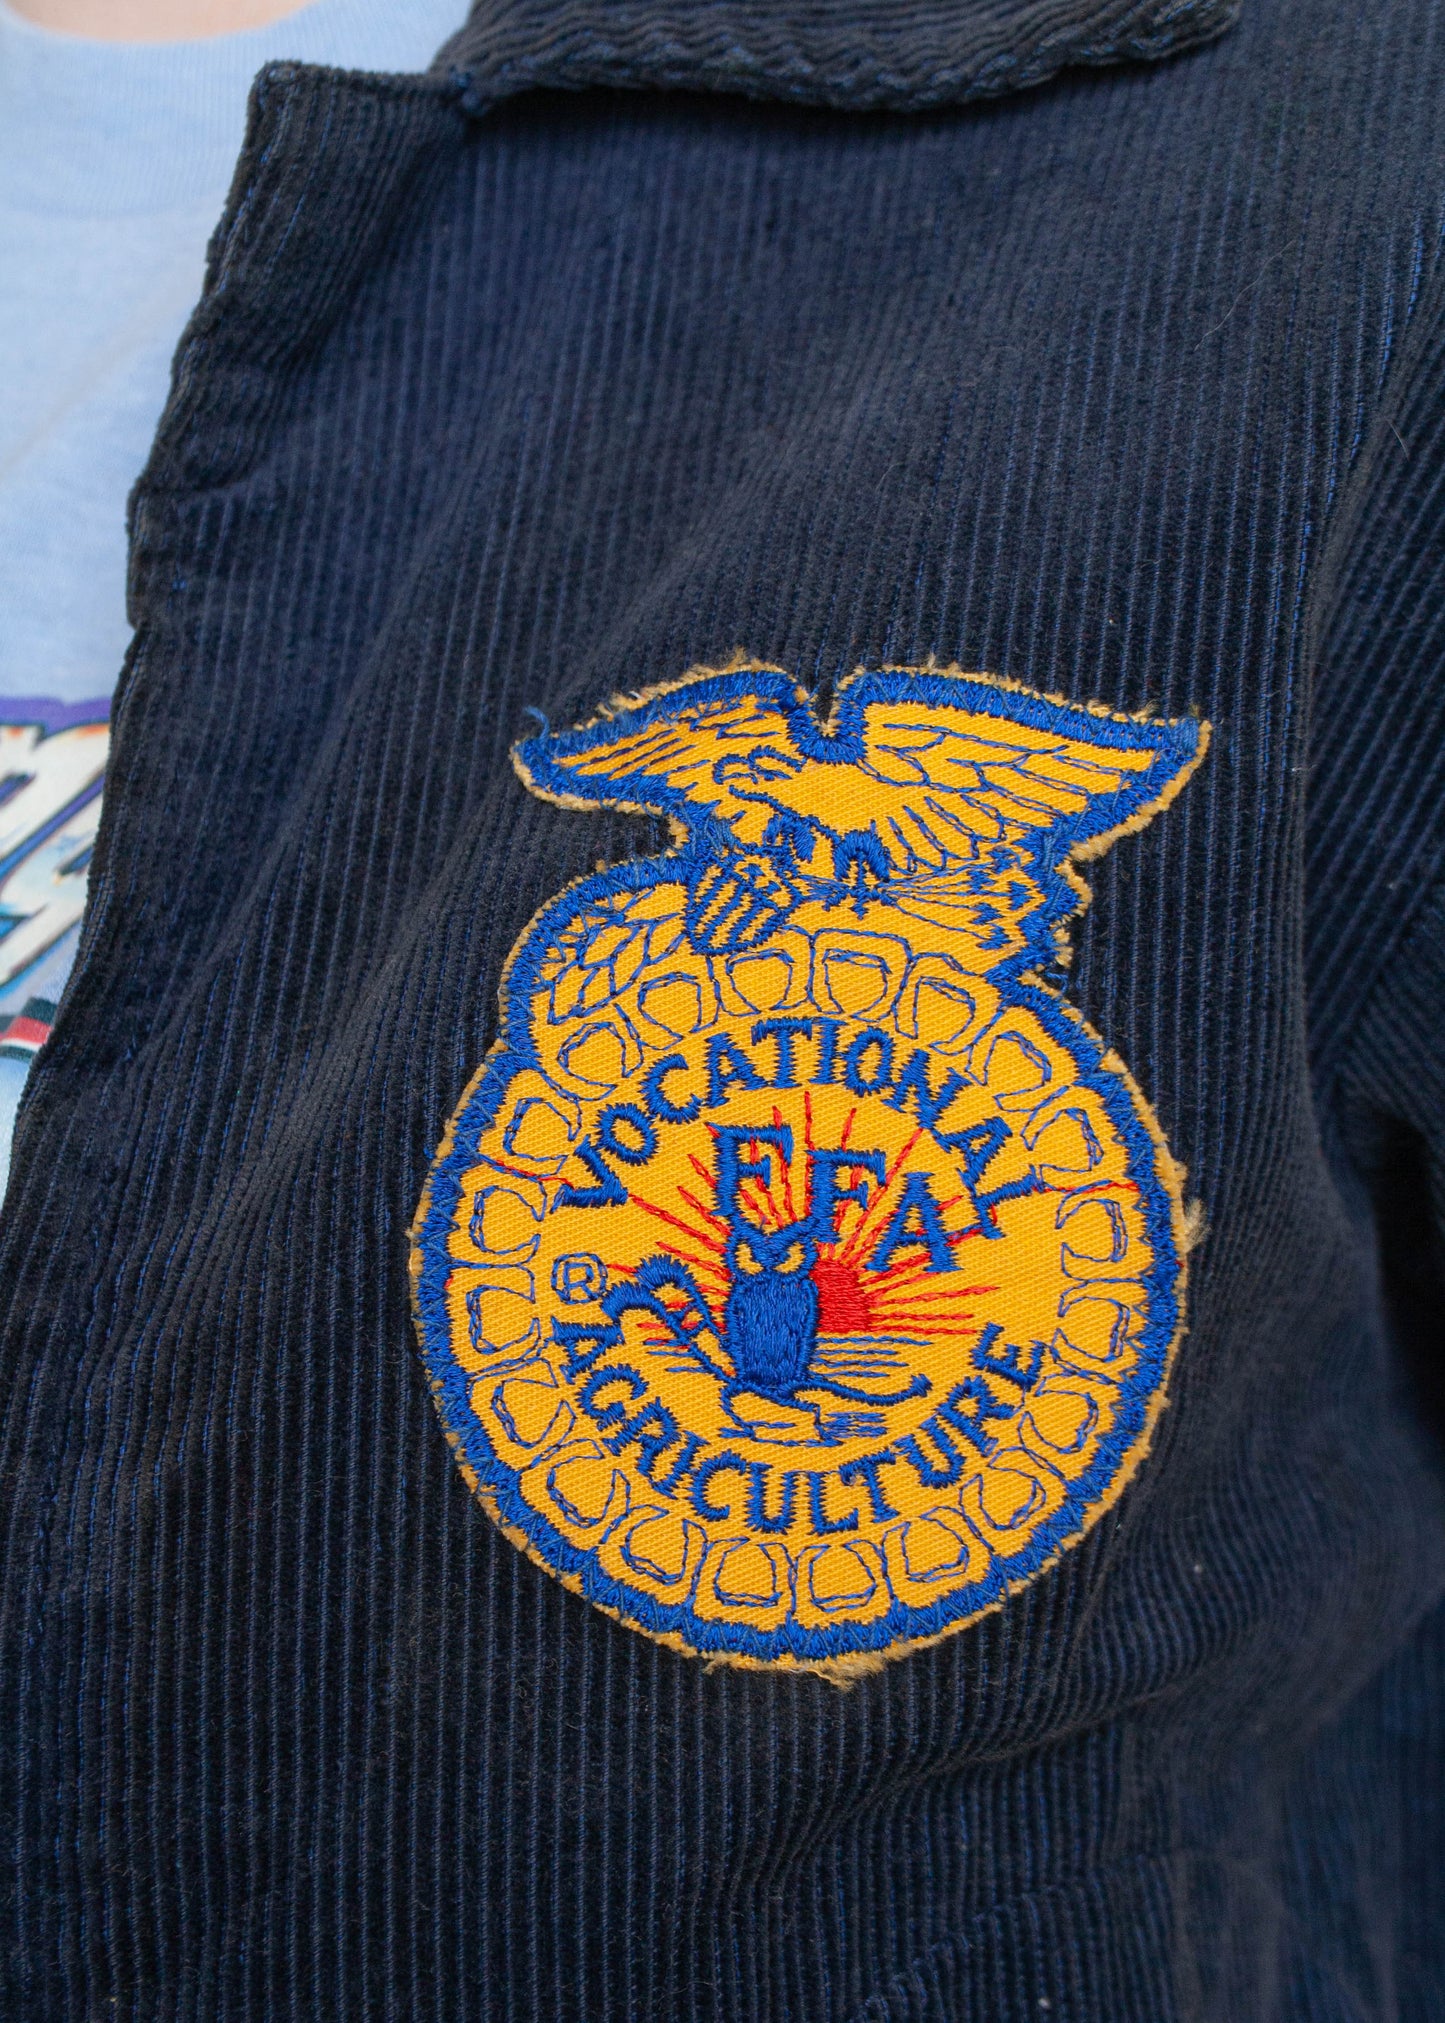 Vintage FFA Jacket Size Small Extra Small